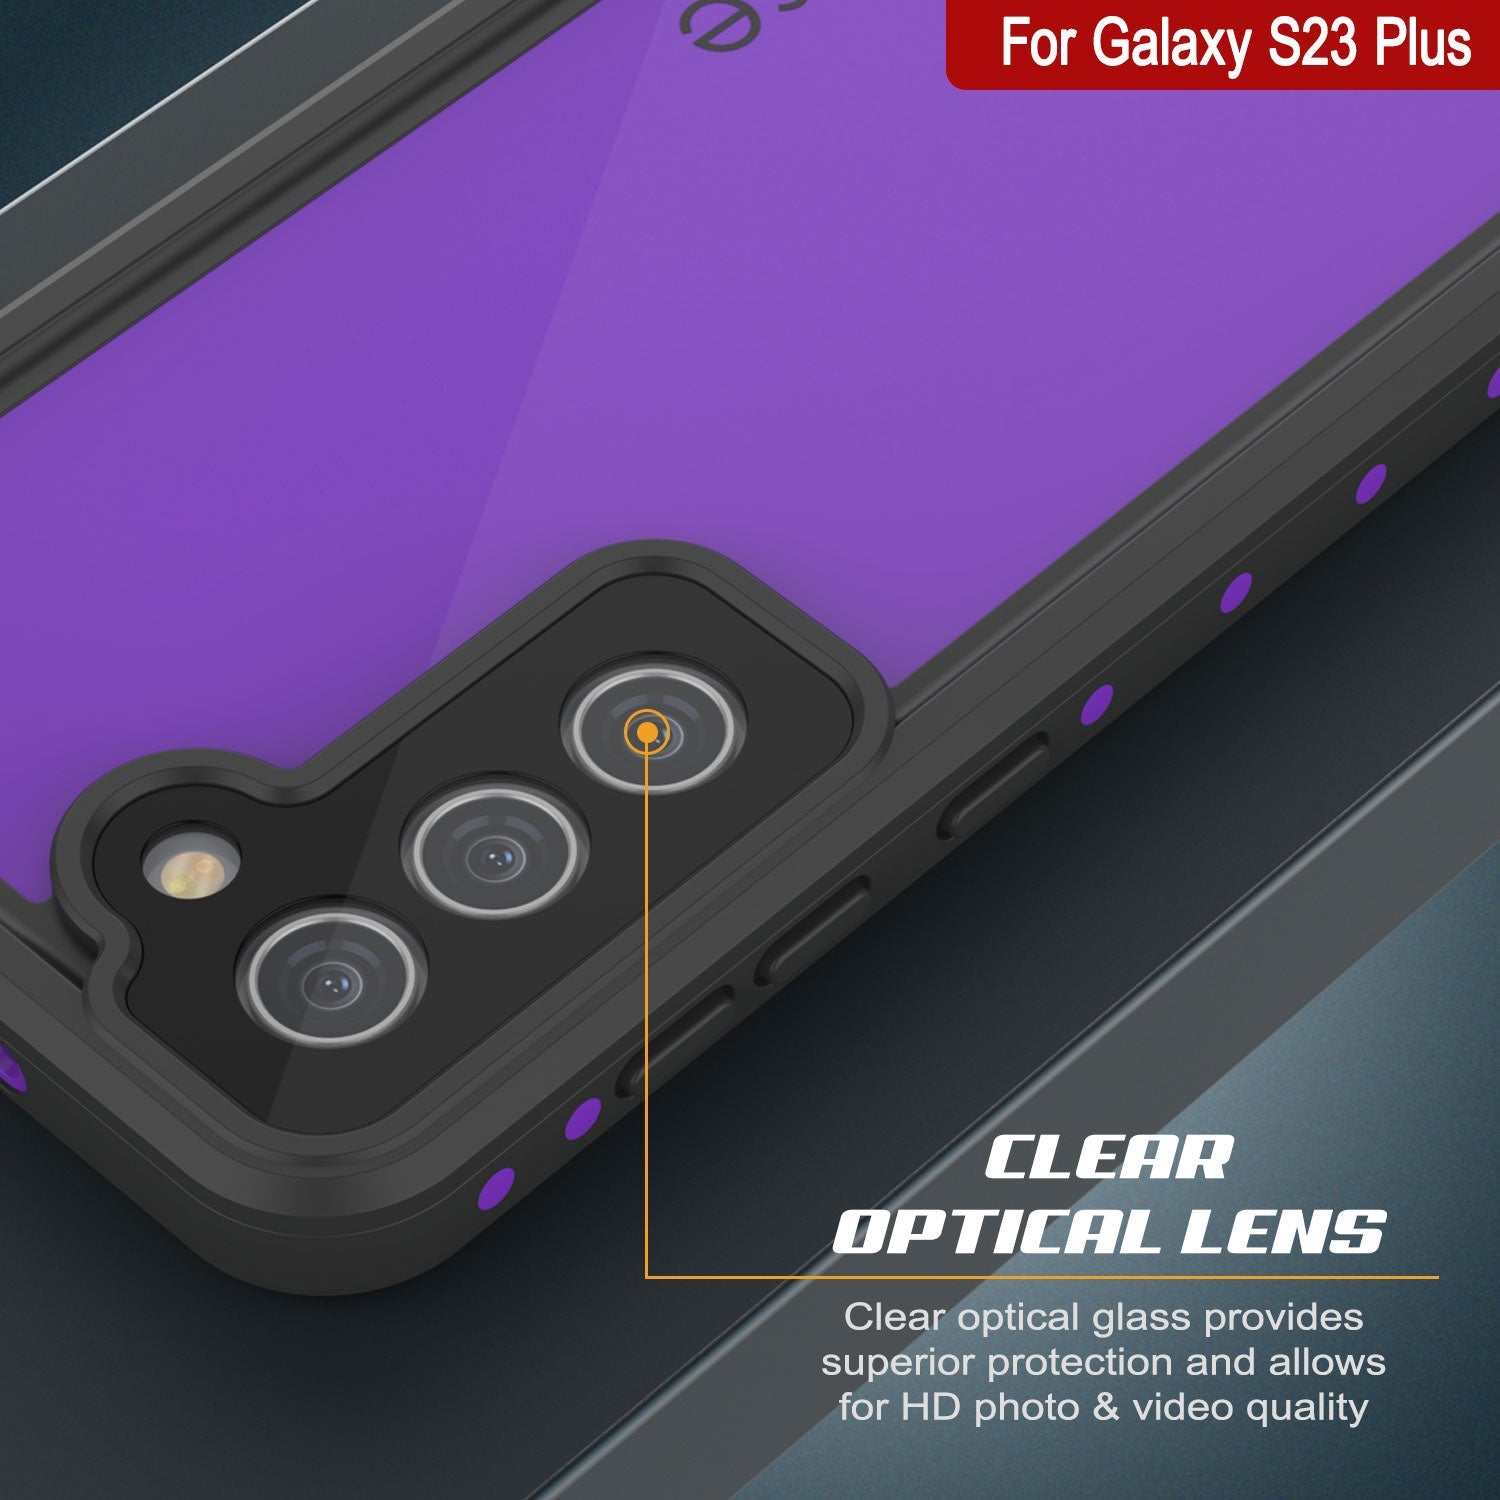 Galaxy S24+ Plus Waterproof Case PunkCase StudStar Purple Thin 6.7ft Underwater IP68 Shock/Snow Proof